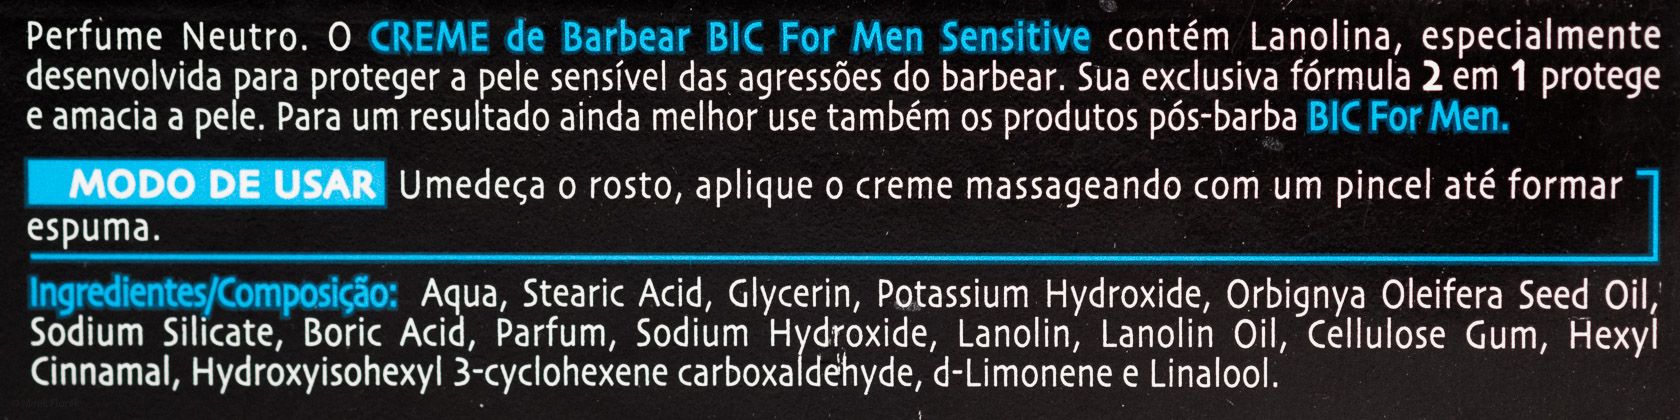 Skład kremu do golenia BiC Sensitive Creme de Barbear (Shaving Cream)